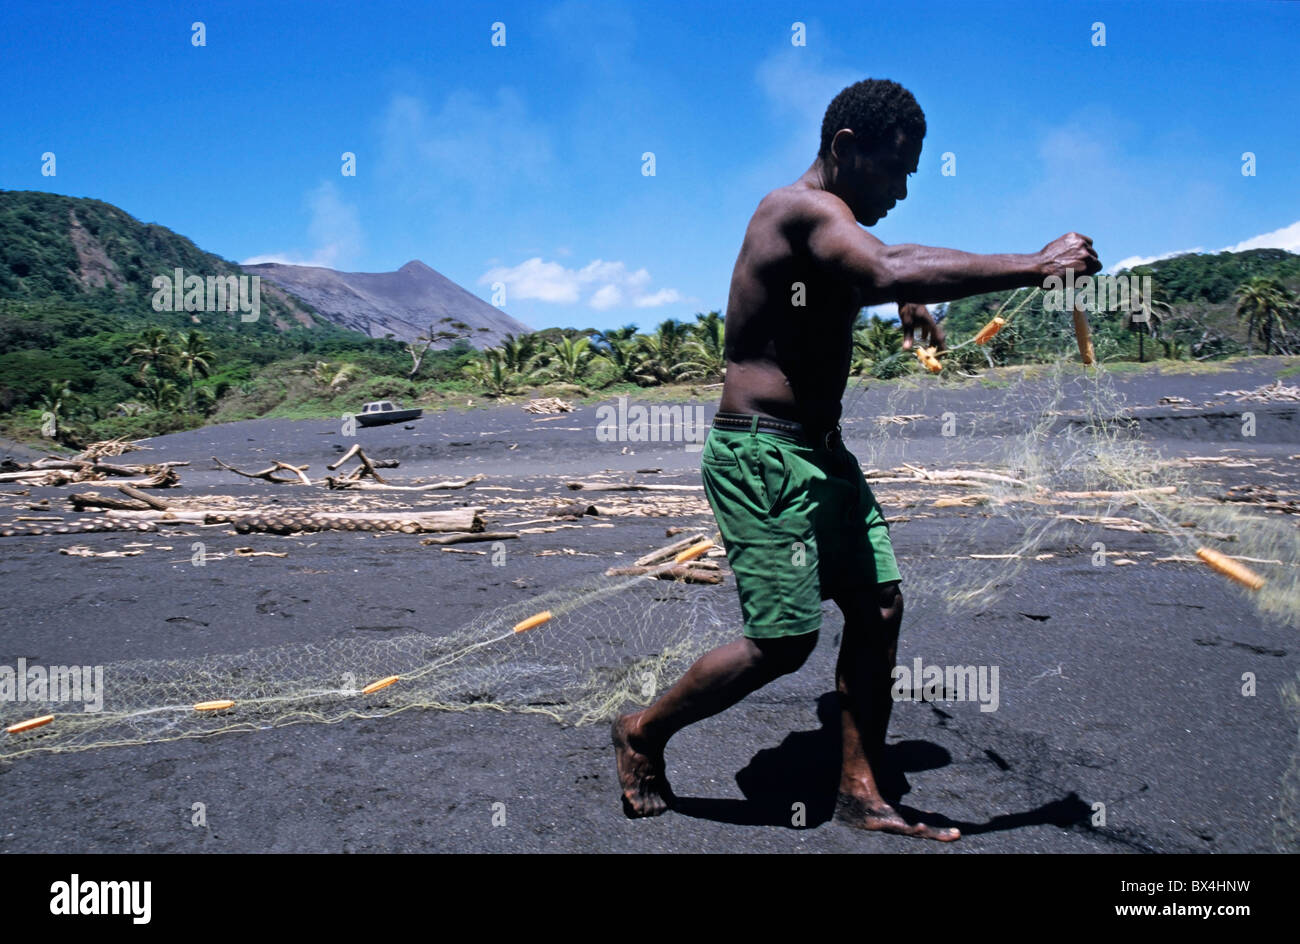 Vanuatu - Fisherman on a black sand beach preparing his nets, Sulphur Bay Village, Tanna Island, Vanuatu. Stock Photo